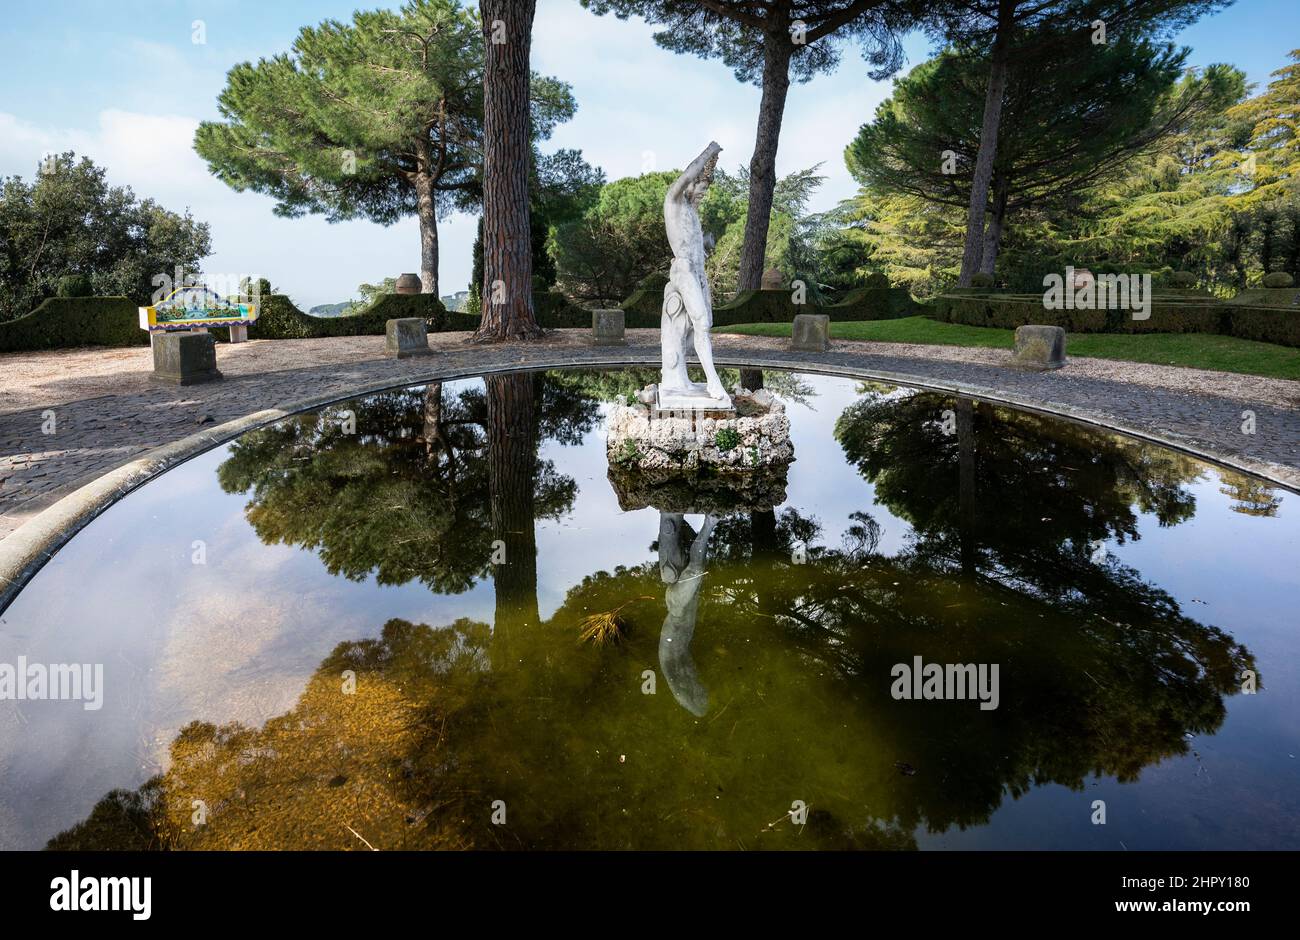 the gardens of the Apostolic palace, summer residence of the Popes, Castel Gandolfo, Italy Stock Photo